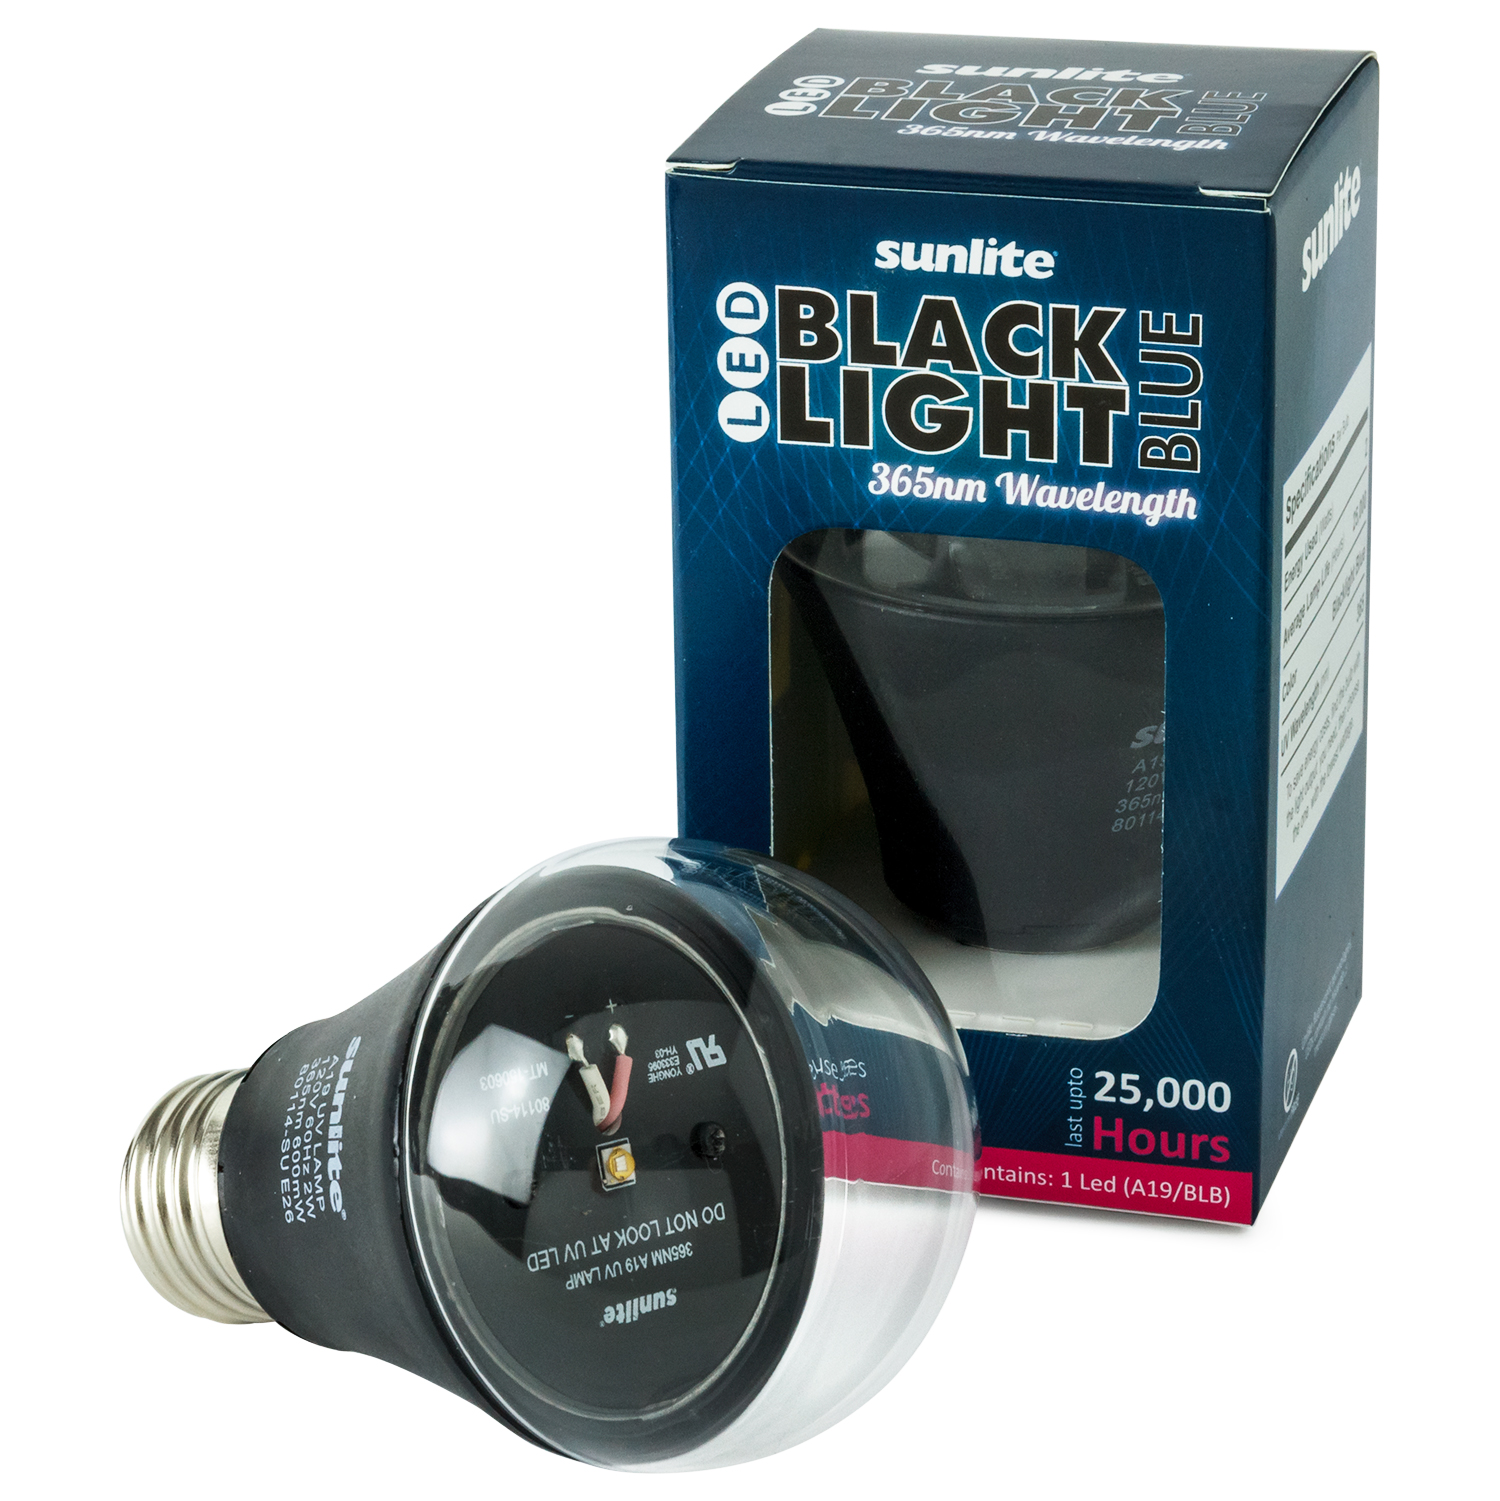 Blacklight Blue Led Packaging Image